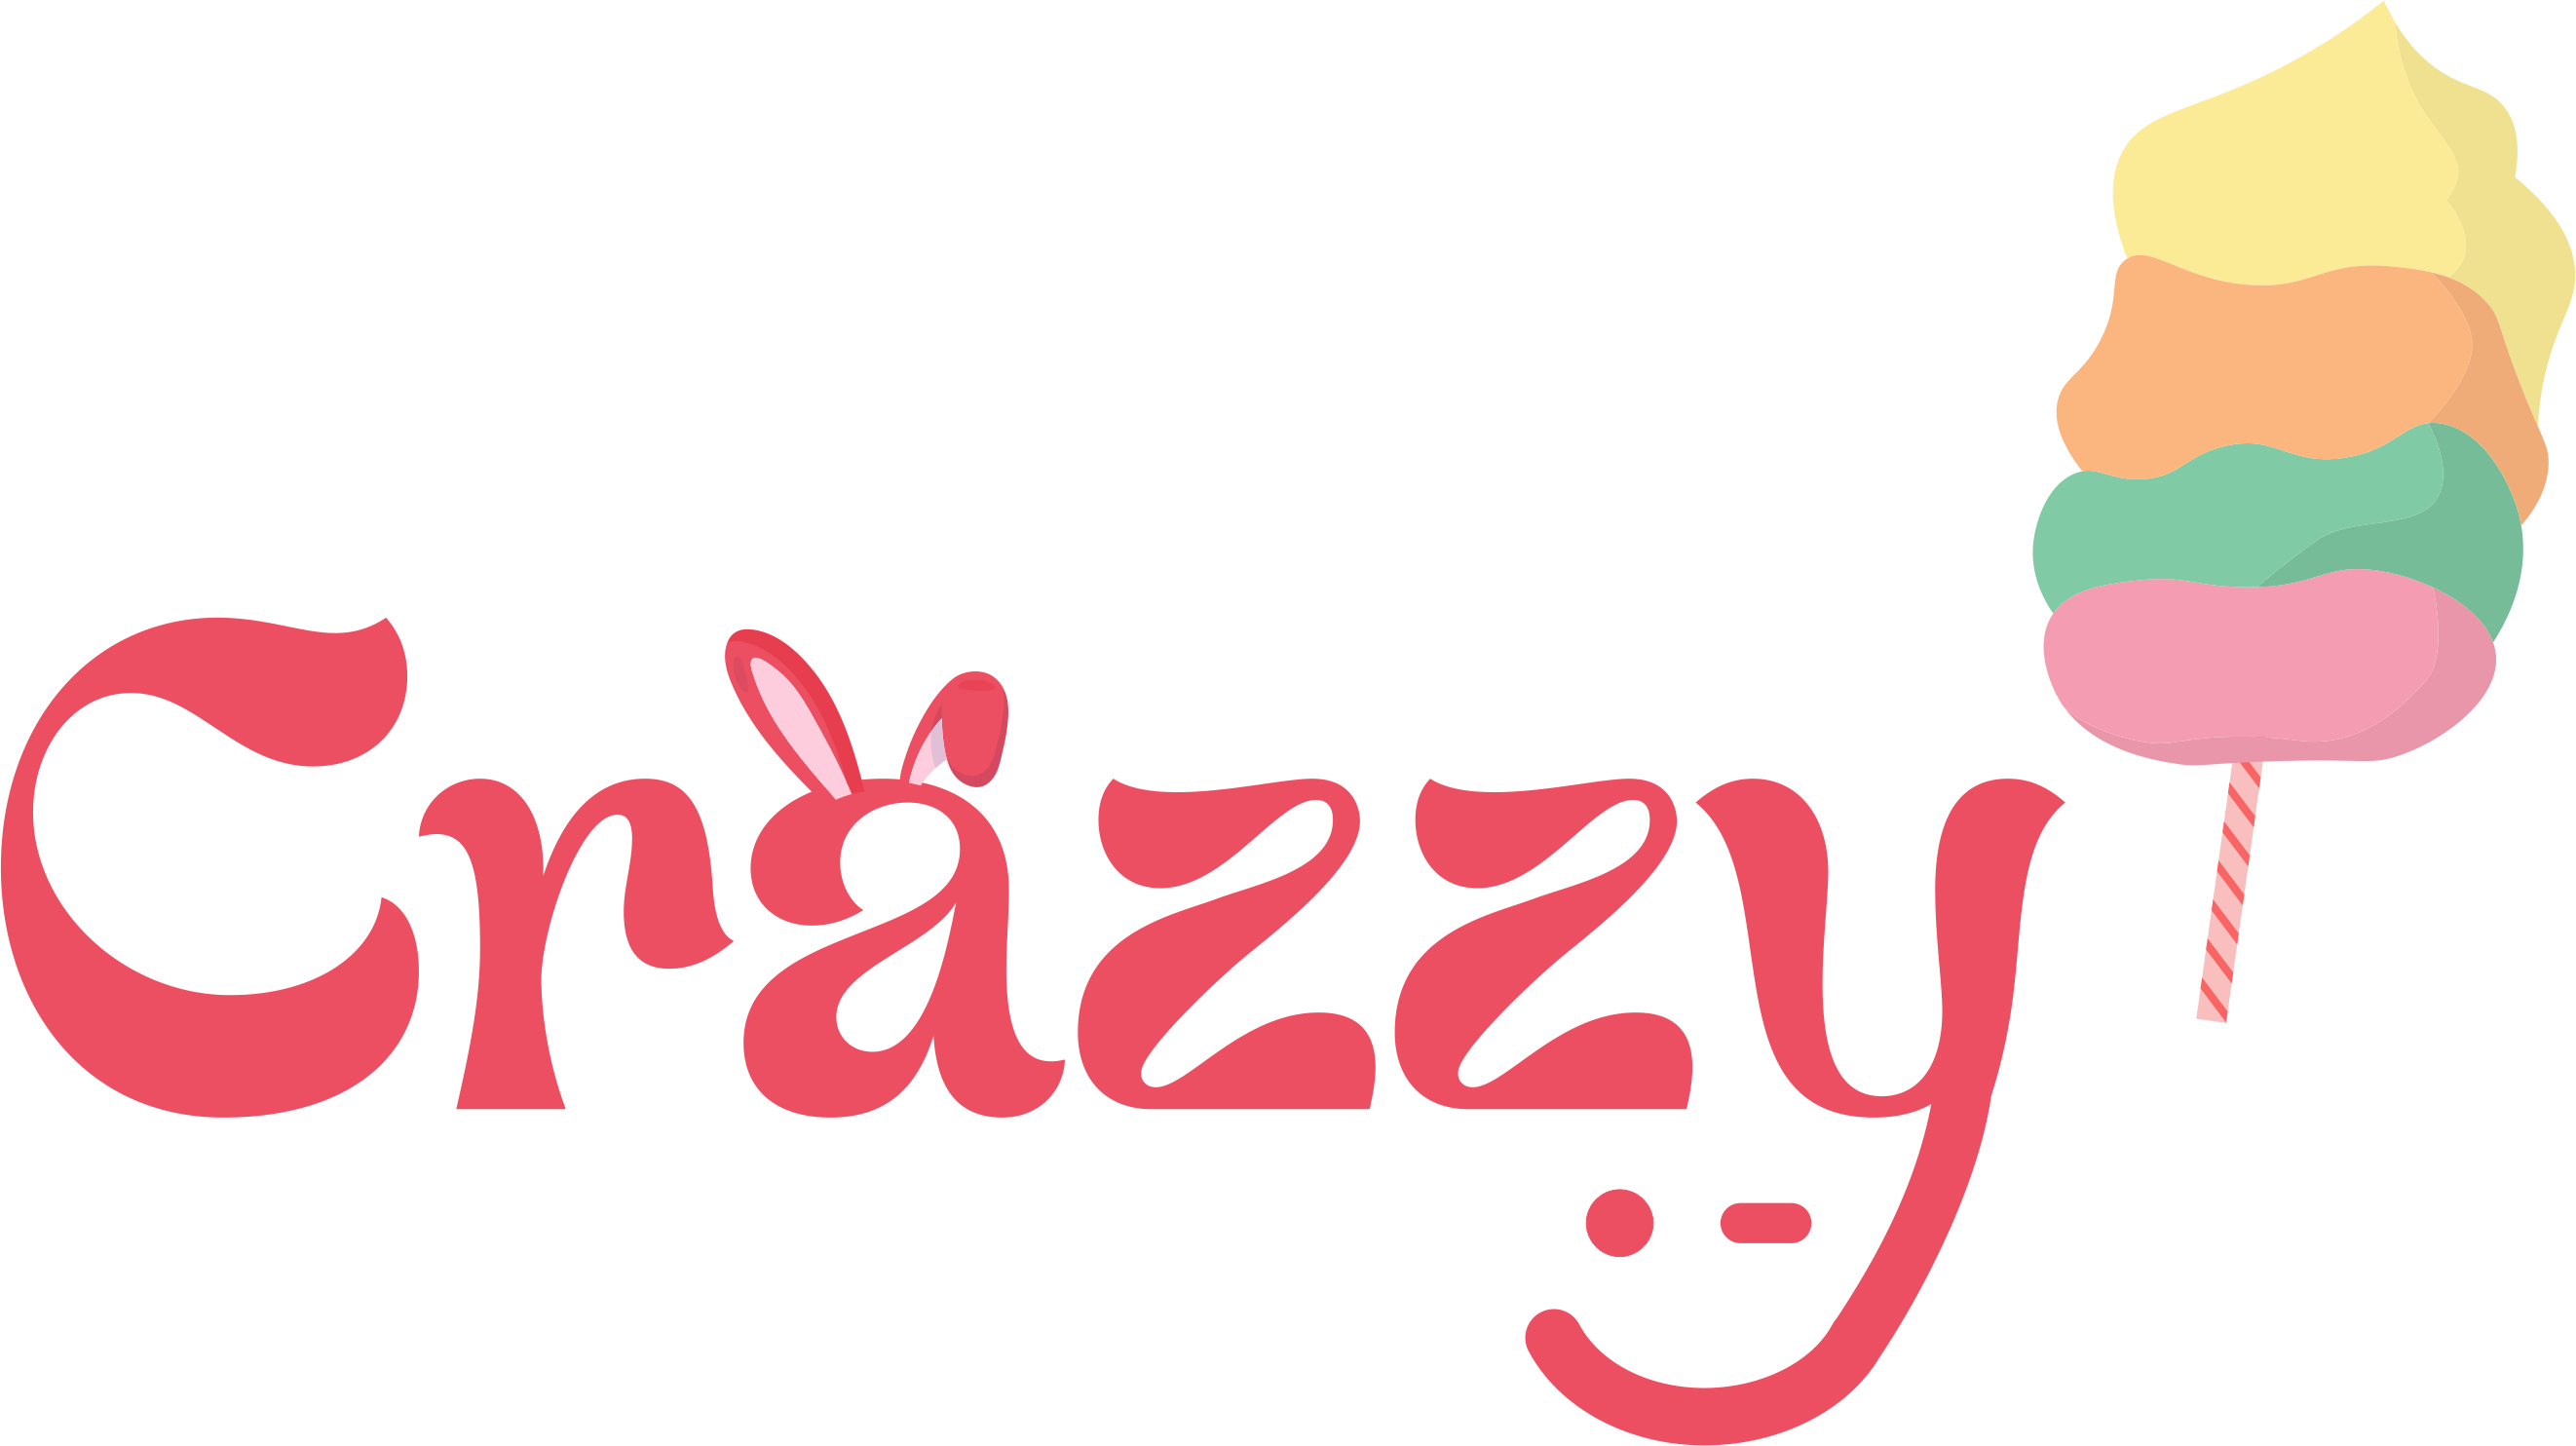 Crazzy logo Malad